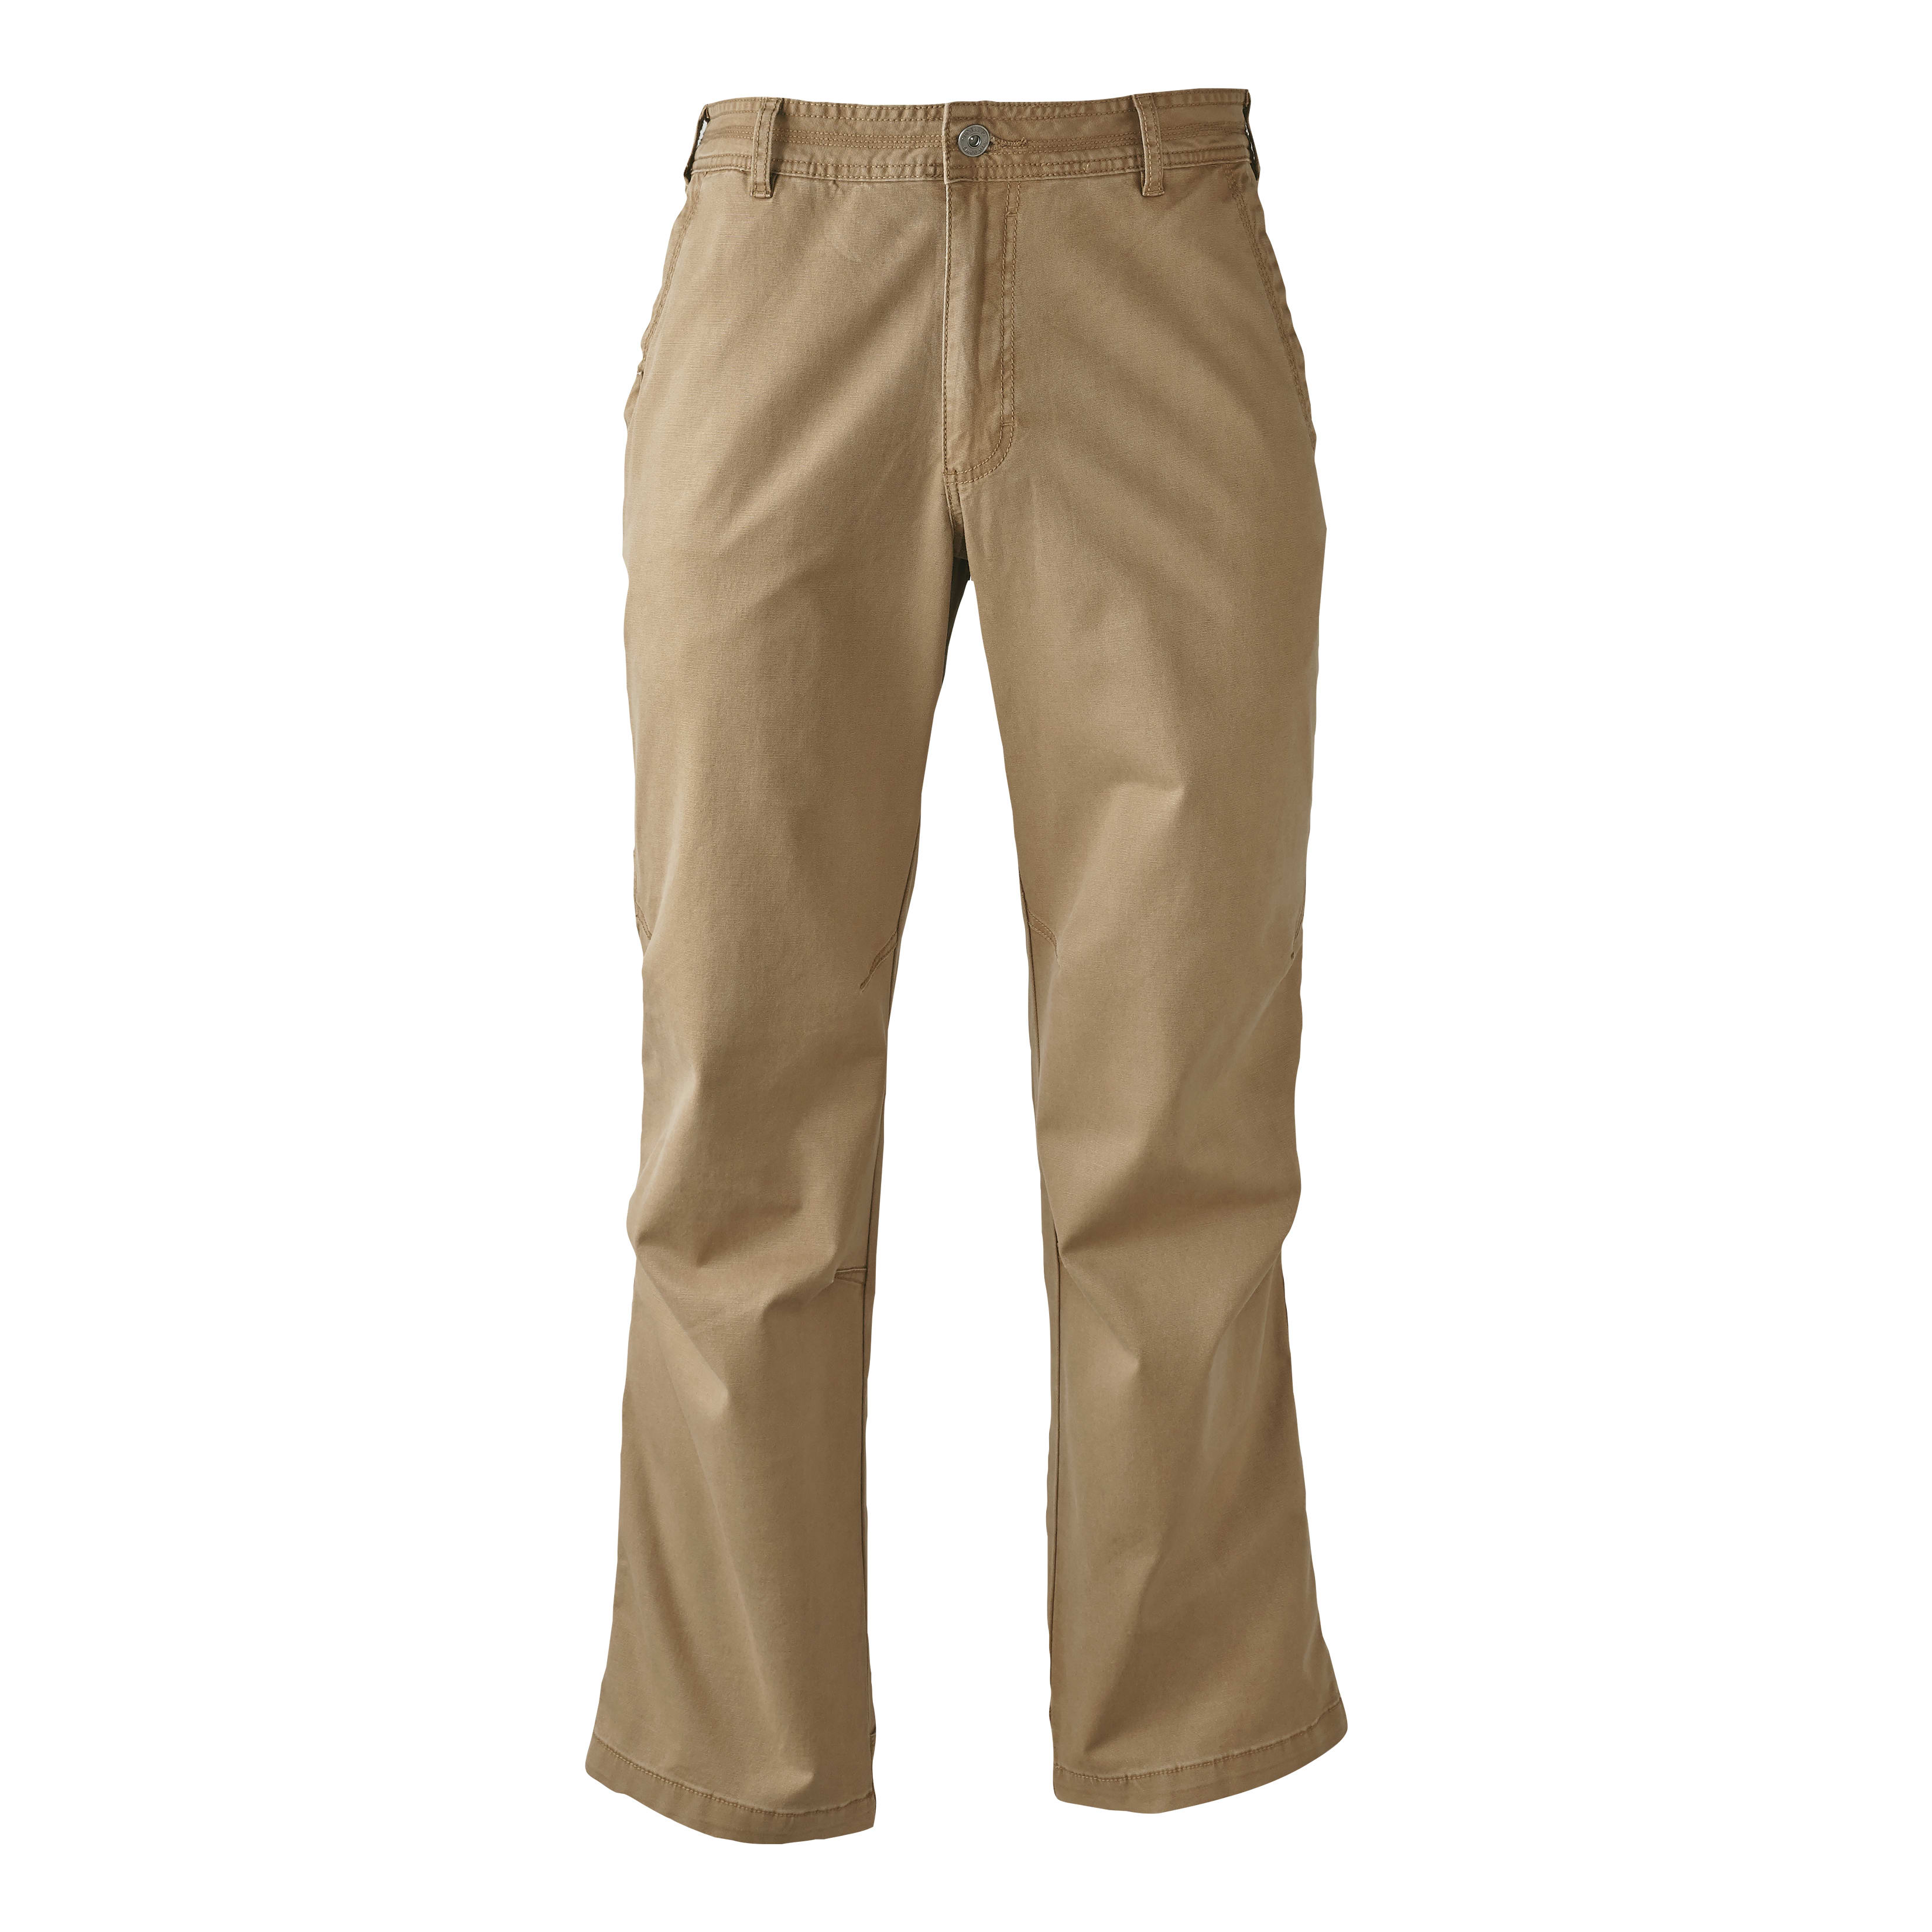 Cabela’s Ultimate Rugged Pants – 30” Inseam - Field Khaki